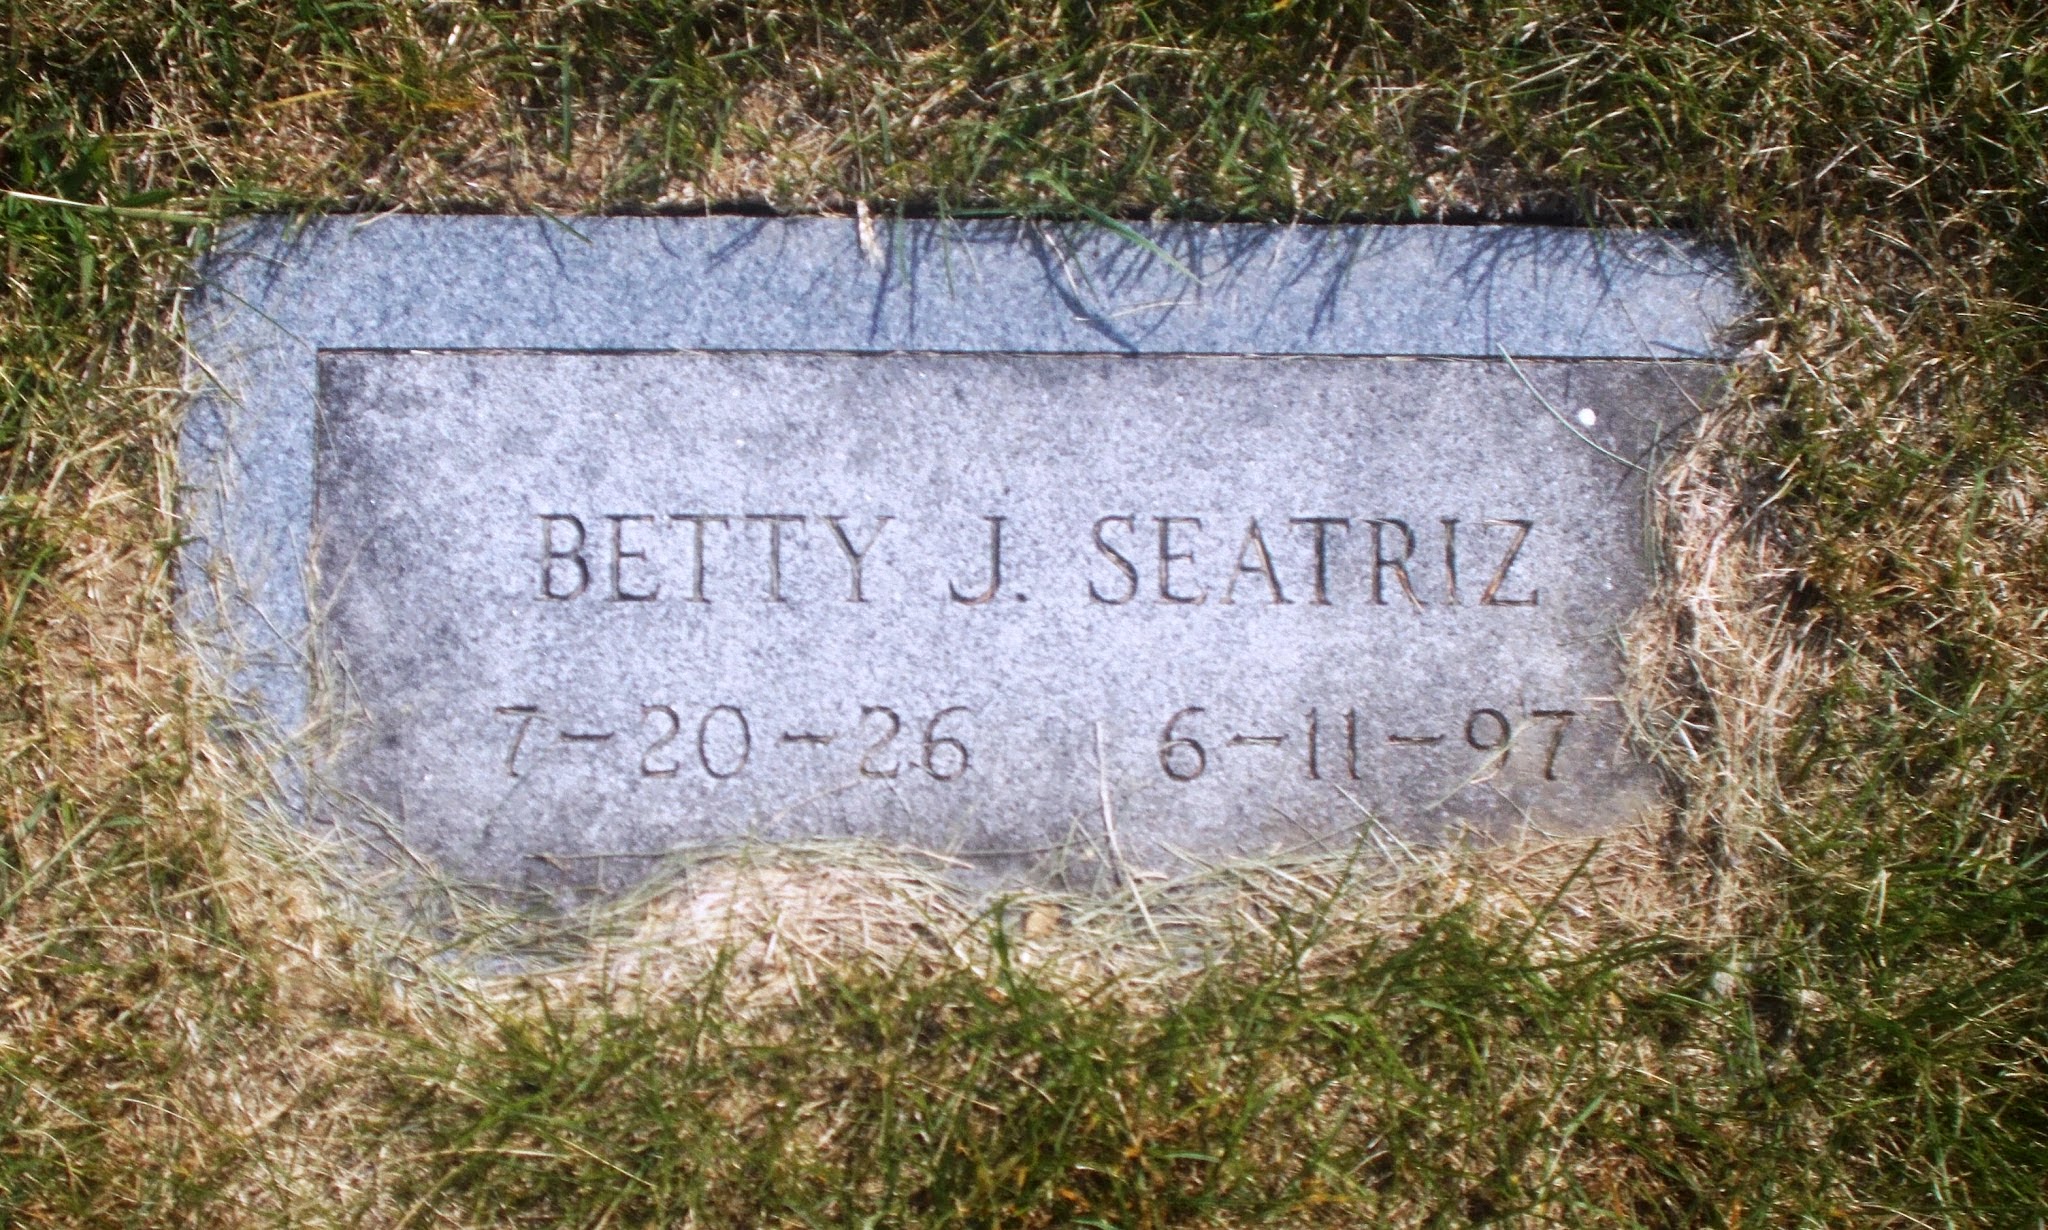 Betty J Seatriz